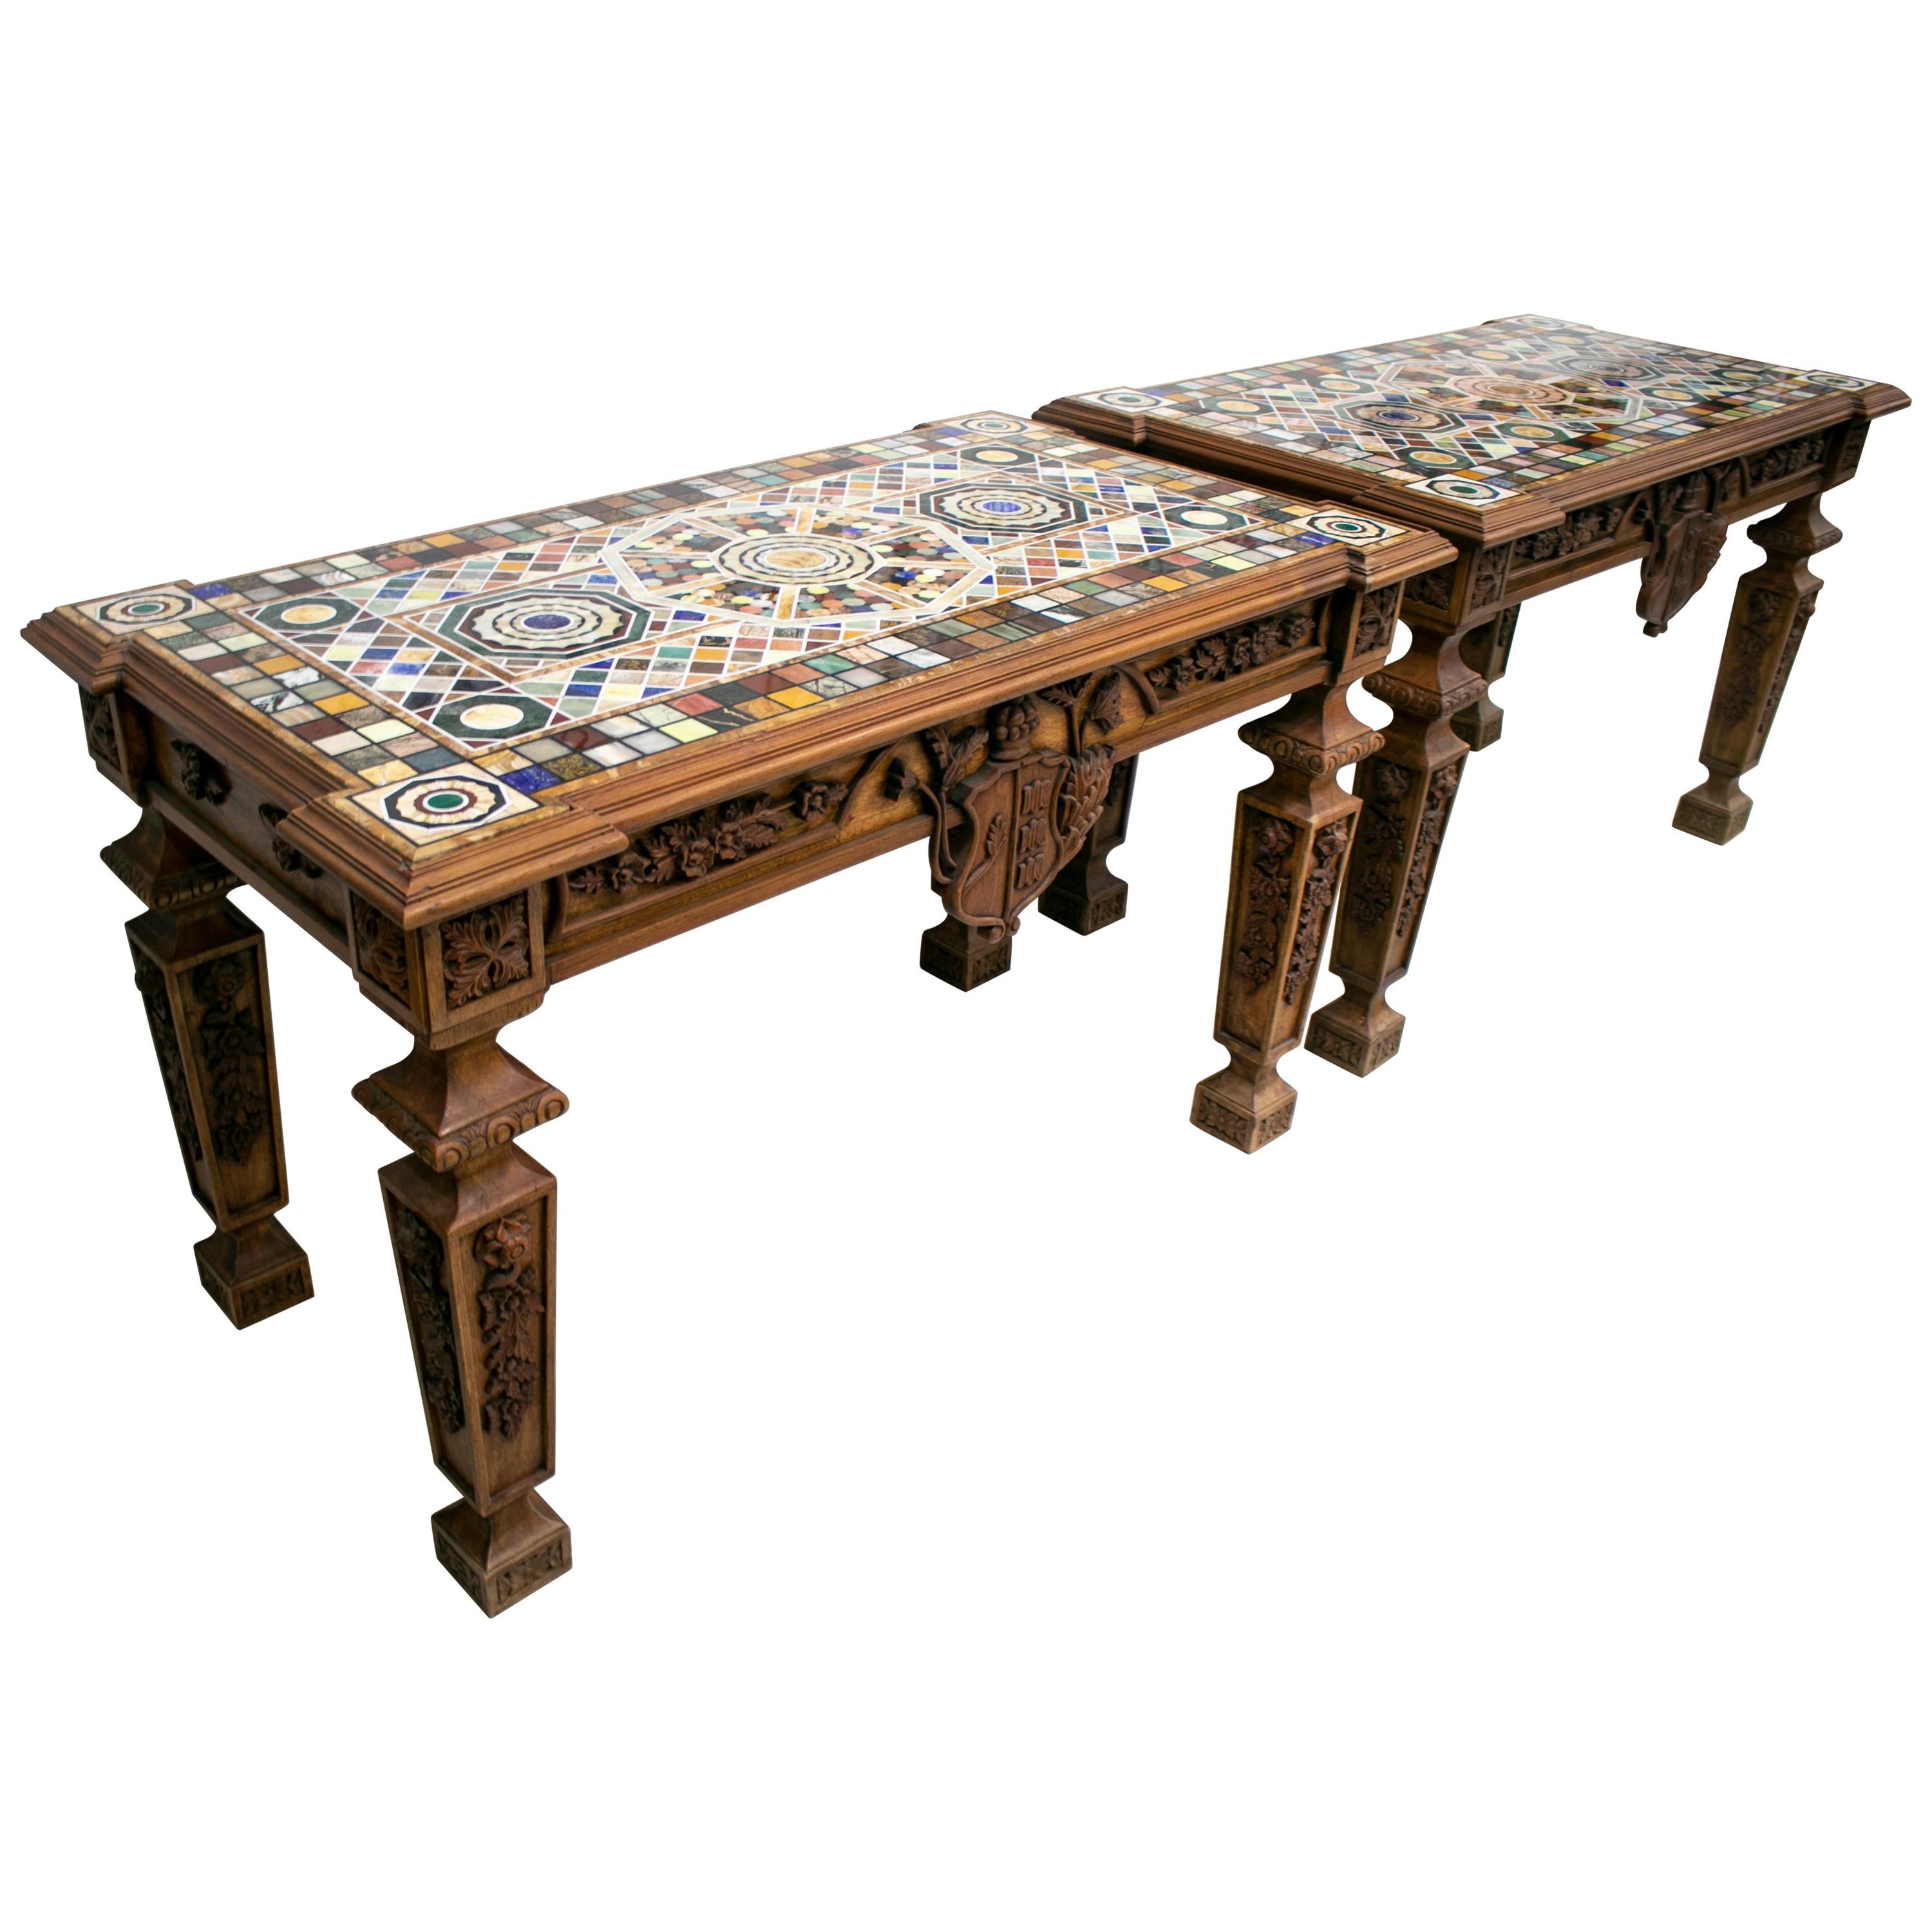 Paar handgefertigte rechteckige Pietre Dure-Mosaik-Tische mit Holzbezug